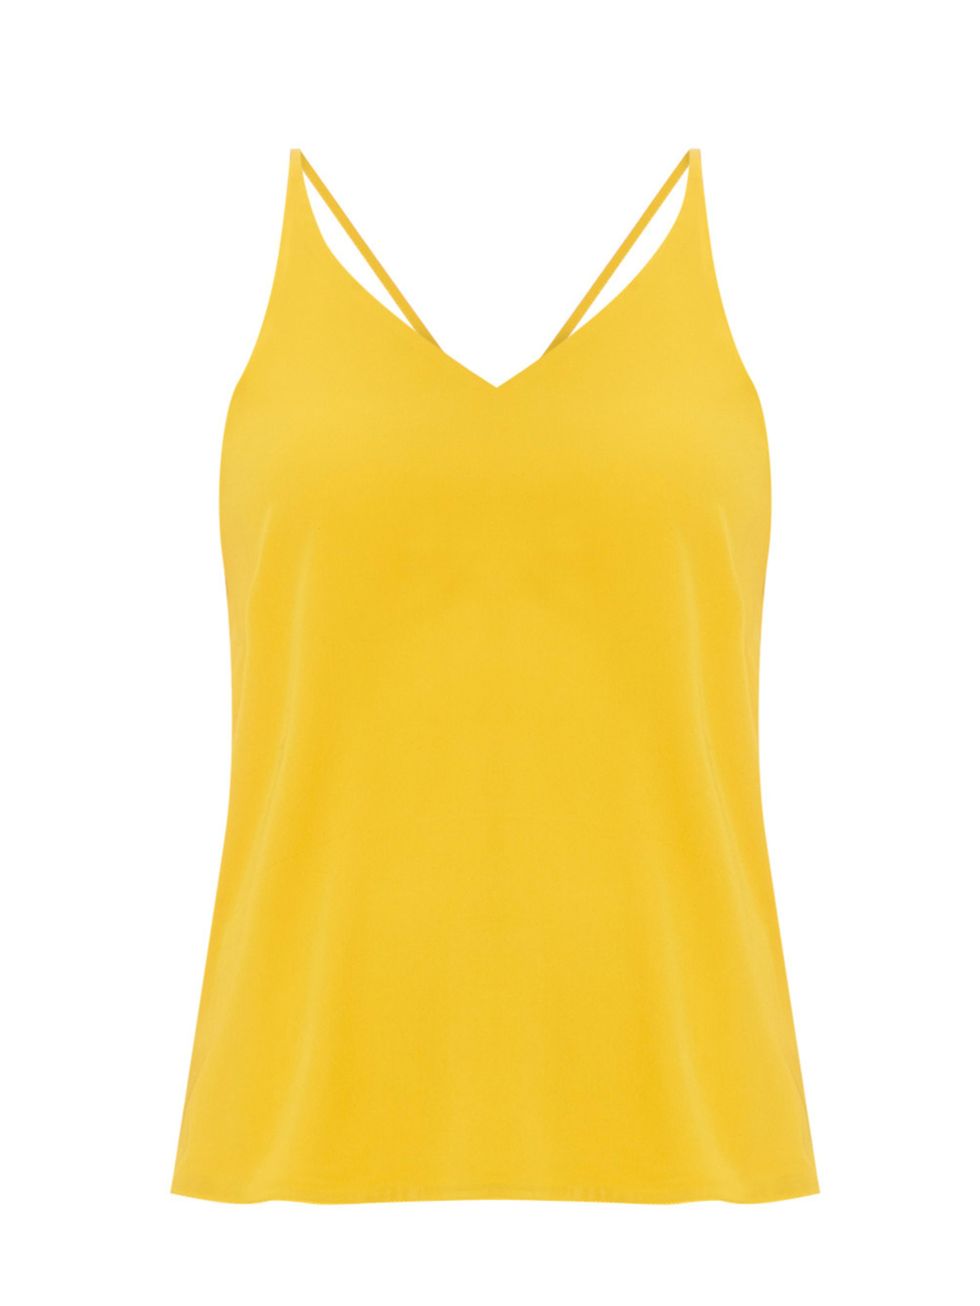 Yellow, Sleeveless shirt, Amber, Orange, Undershirt, Active tank, Vest, Day dress, Active shirt, One-piece garment, 